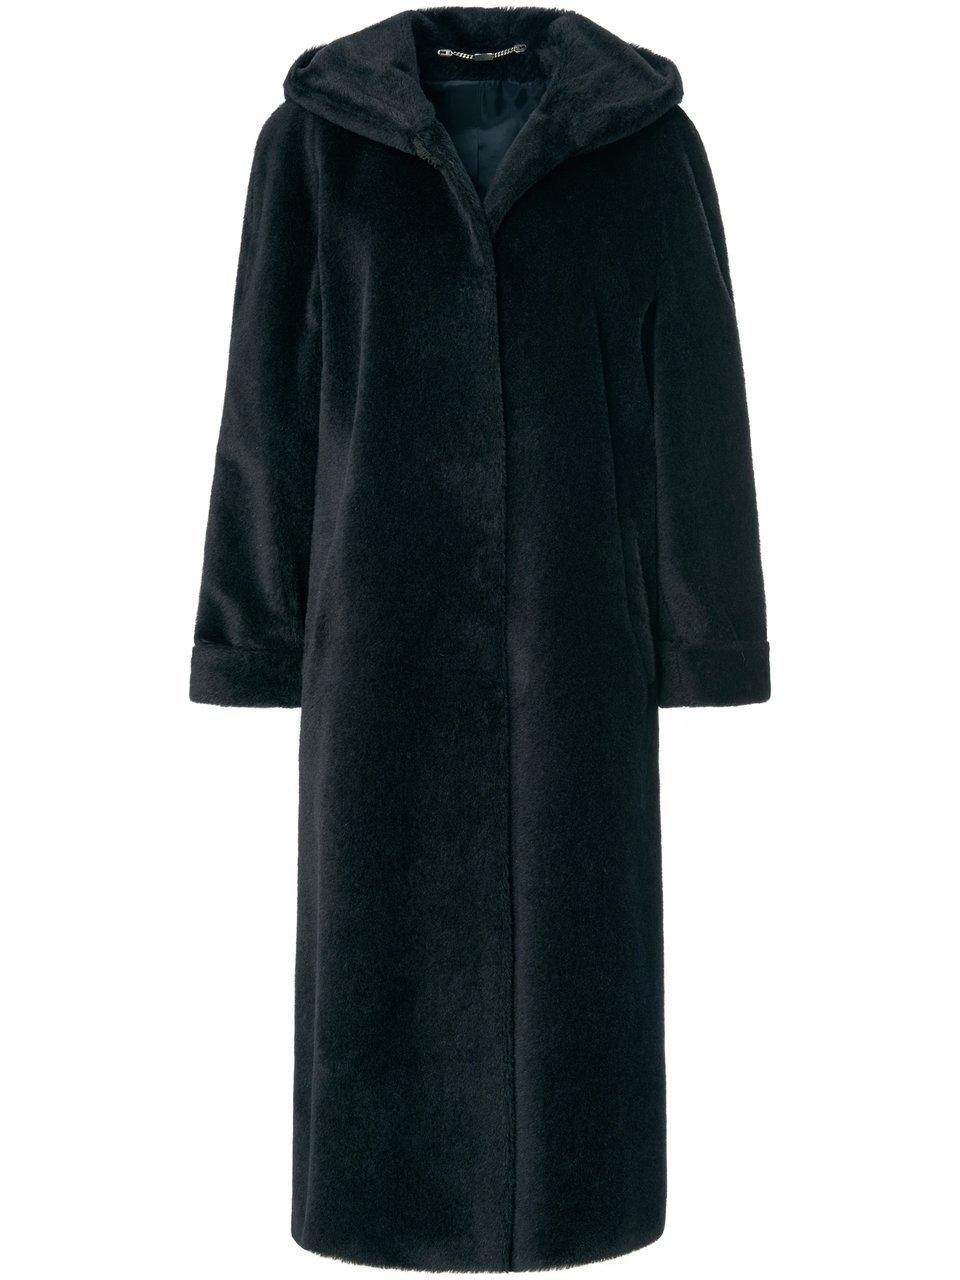 Coat Peter Hahn black